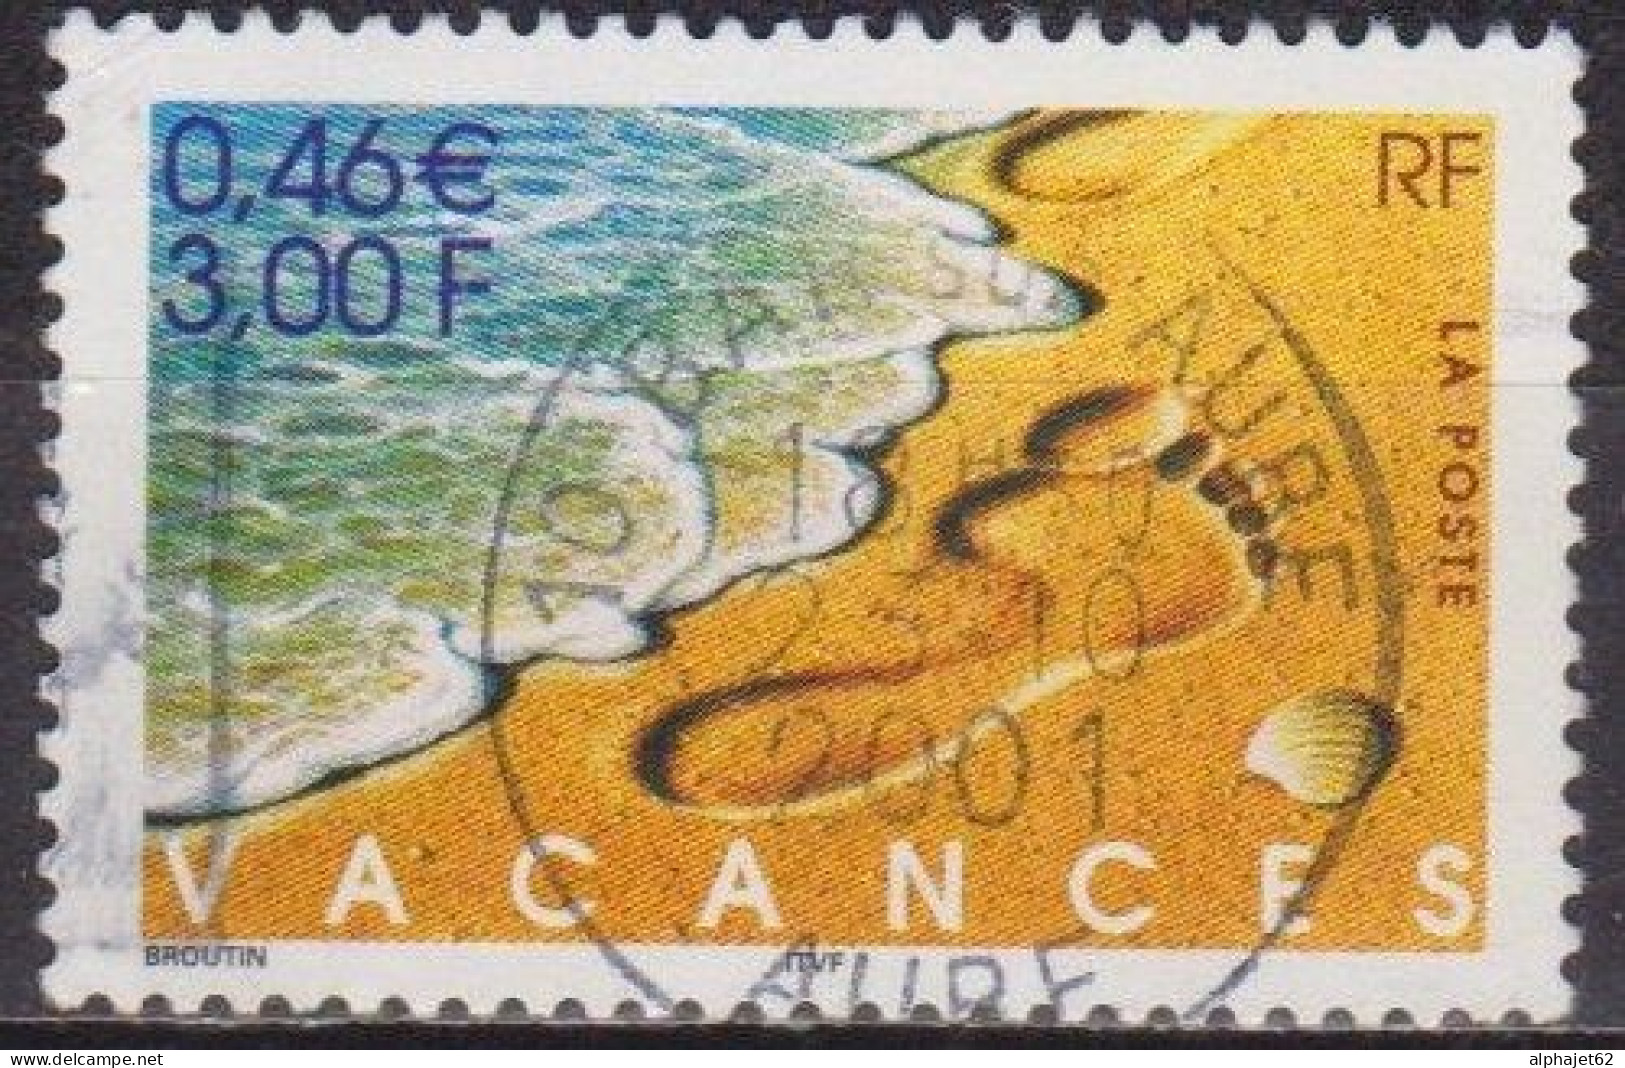 Vacances - FRANCE - Pas Dans Le Sable, Mer - N° 3399 - 2001 - Gebruikt